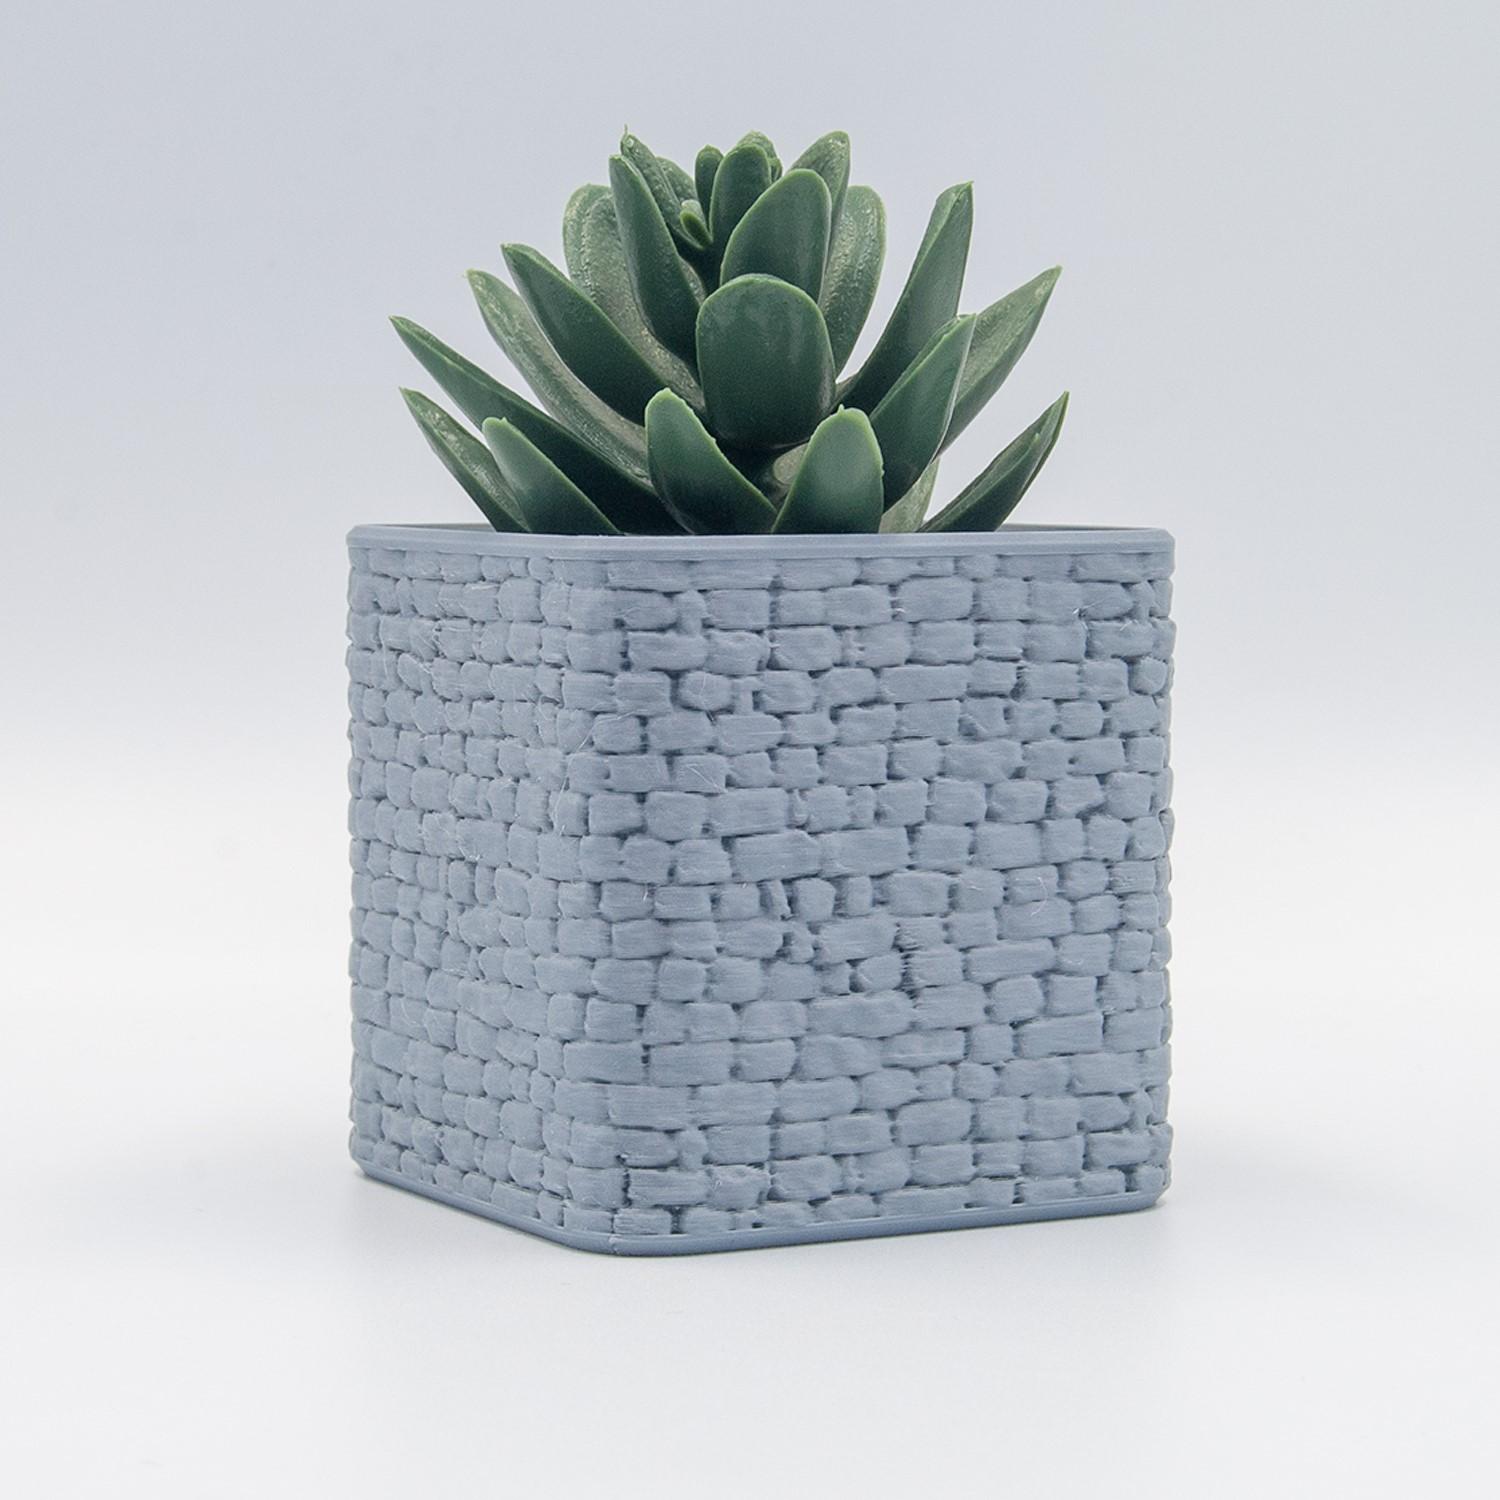 stone-wall-planter-1-1-02